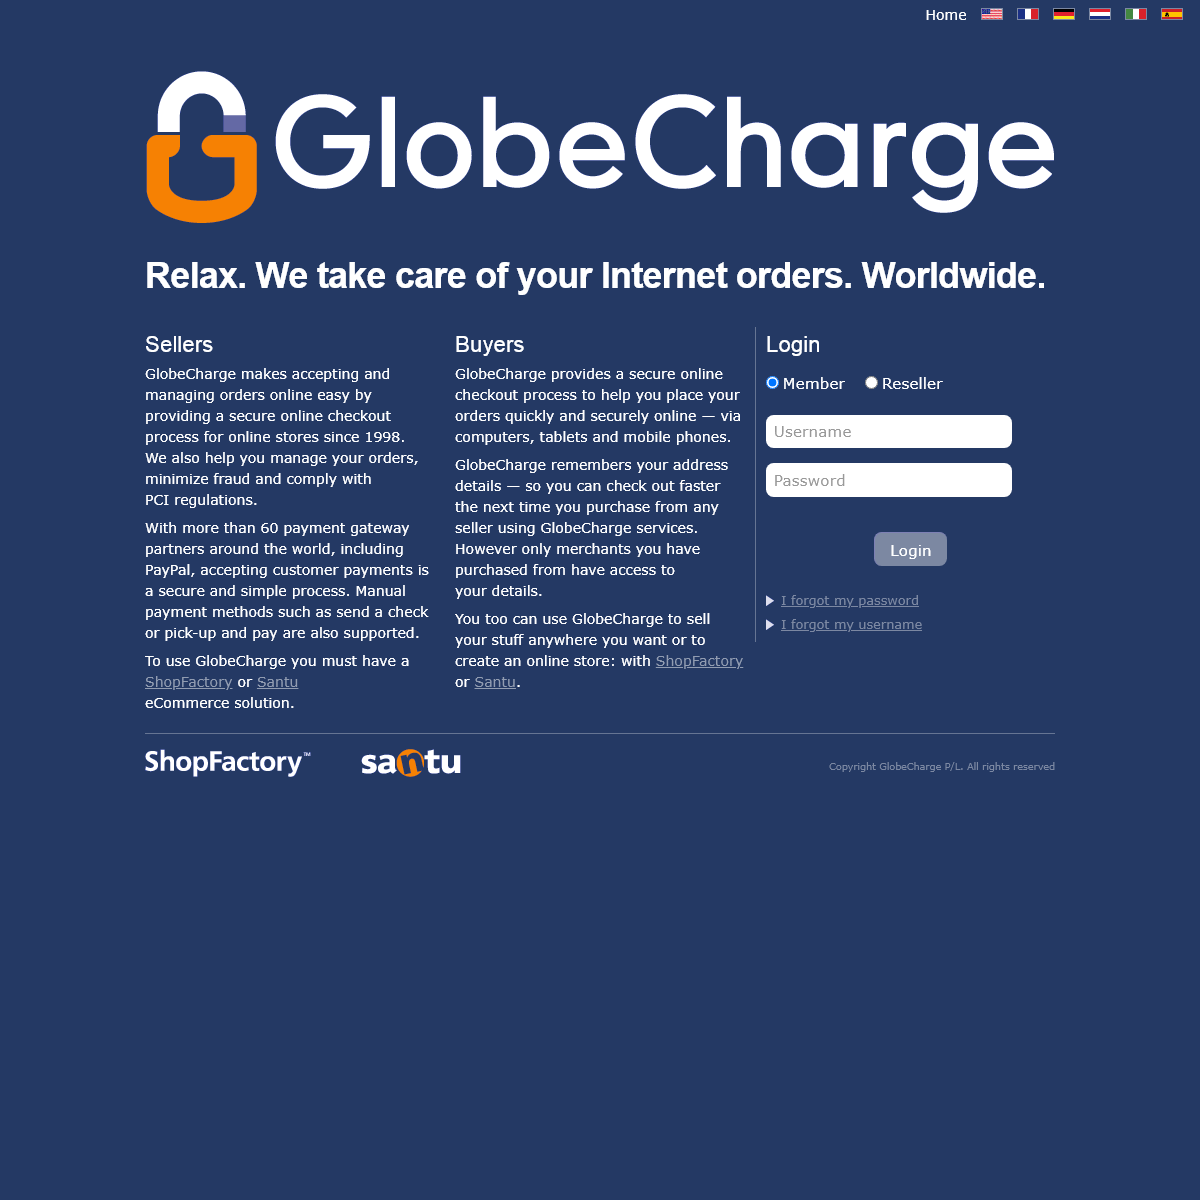 A complete backup of globecharge.com